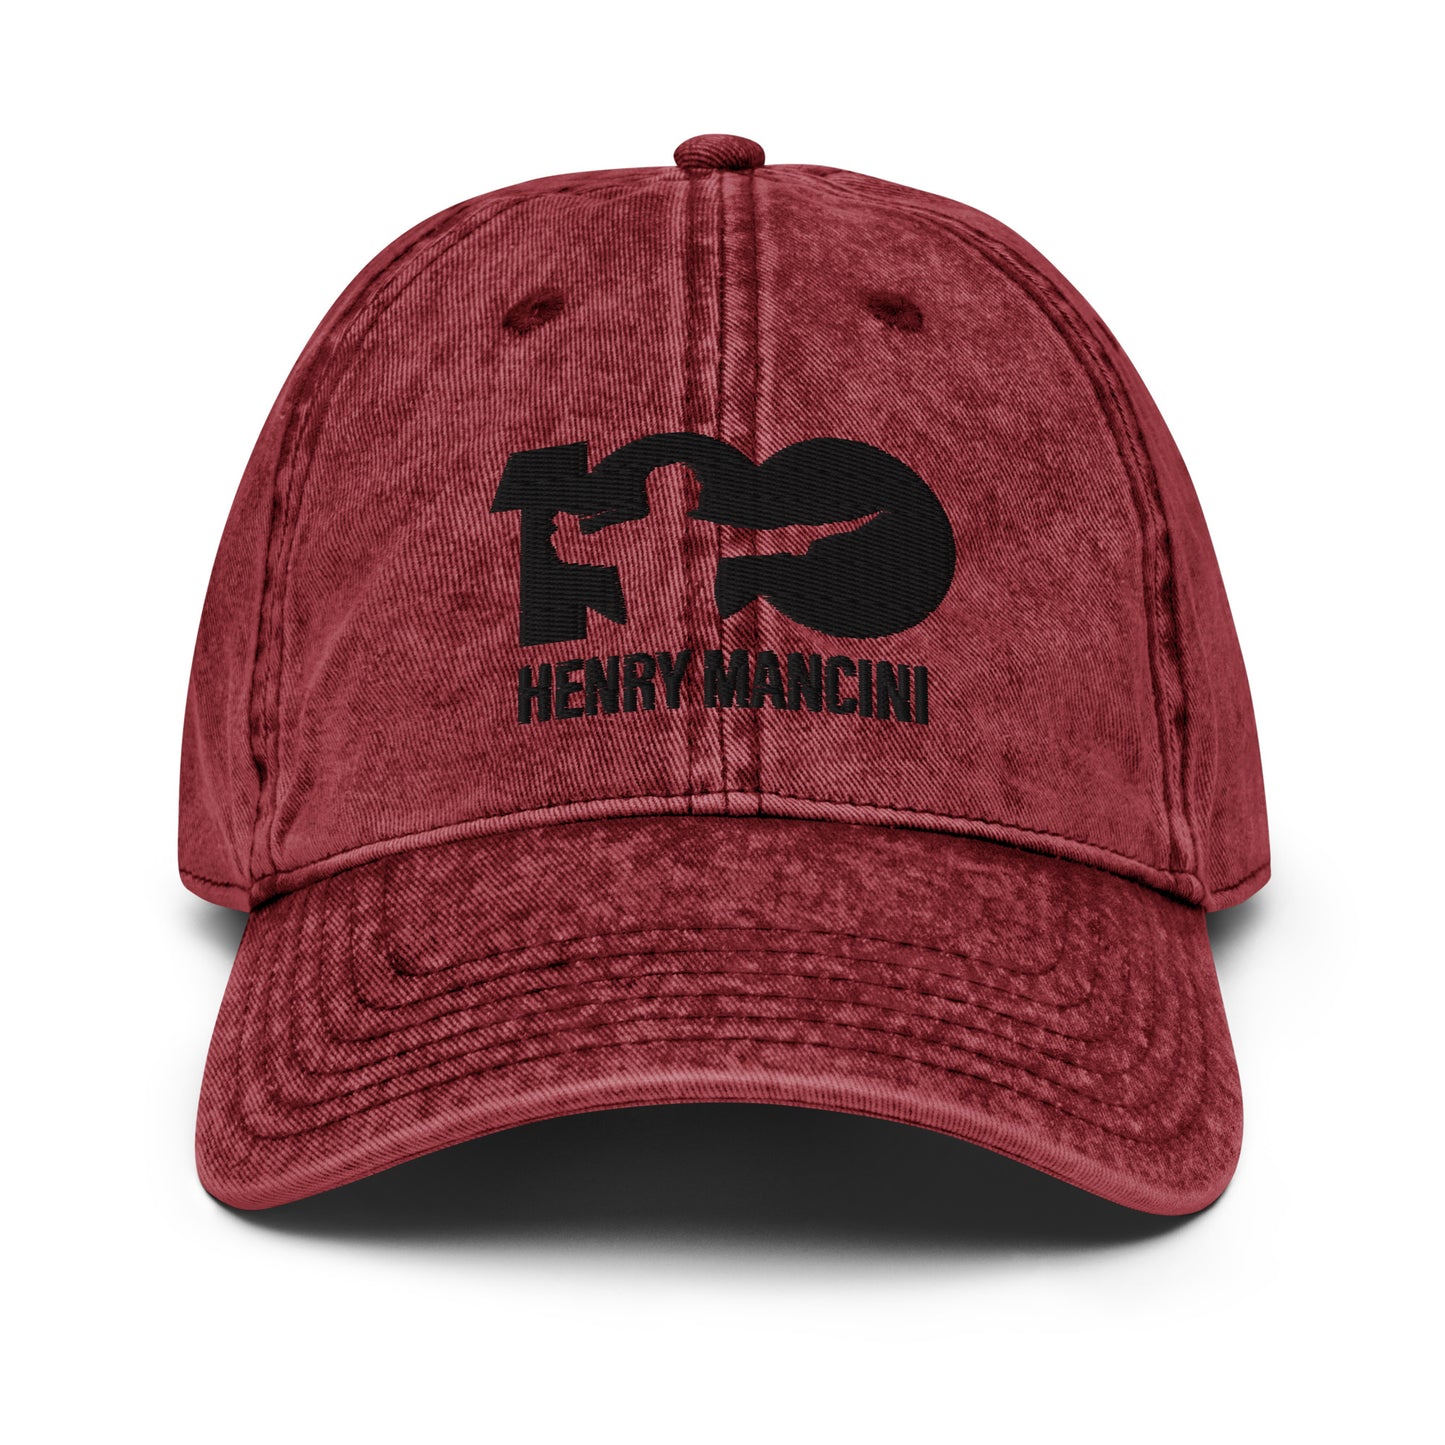 MANCINI 100TH CAP - WINE & ROSES RED